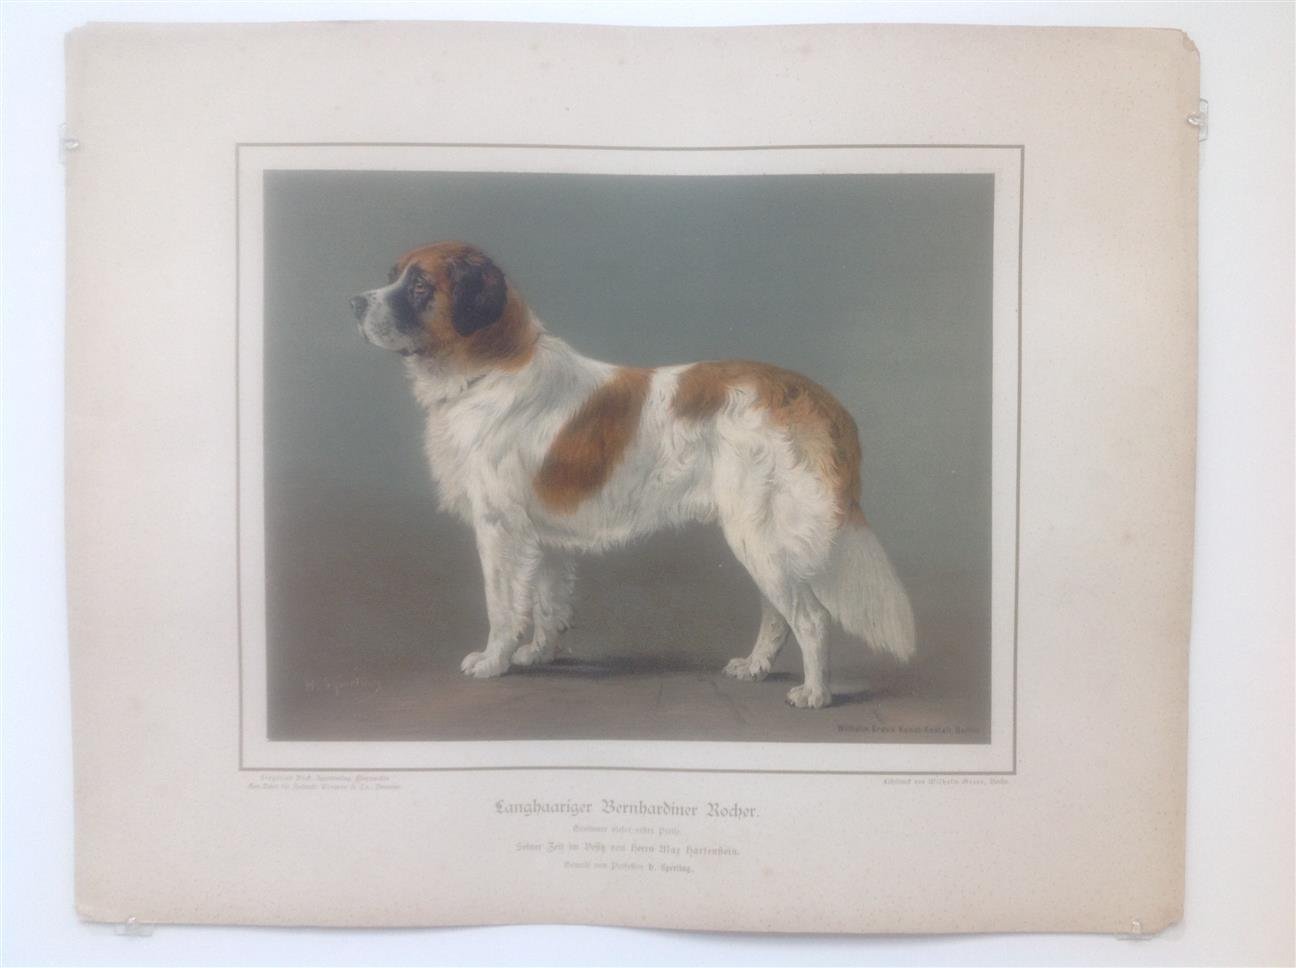 H. Sperling - lithograaf : Wilhelm Greve - (DECORATIEVE PRENT,  LITHO - DECORATIVE PRINT, LITHOGRAPH -) Rashond - Sint-bernards hond / Bernardiner Dog